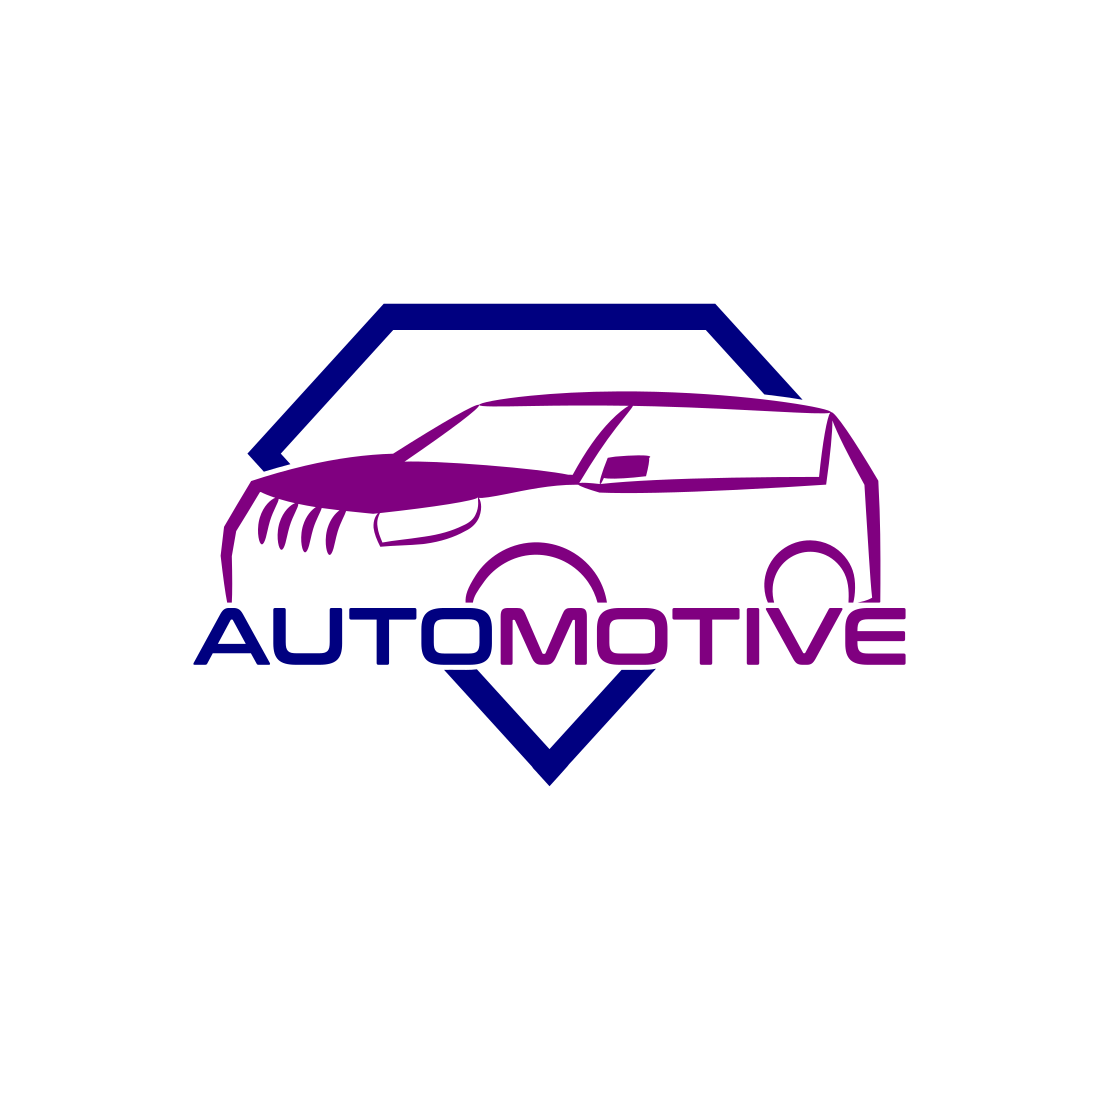 Automotive Creative Style Logo Design preview image.